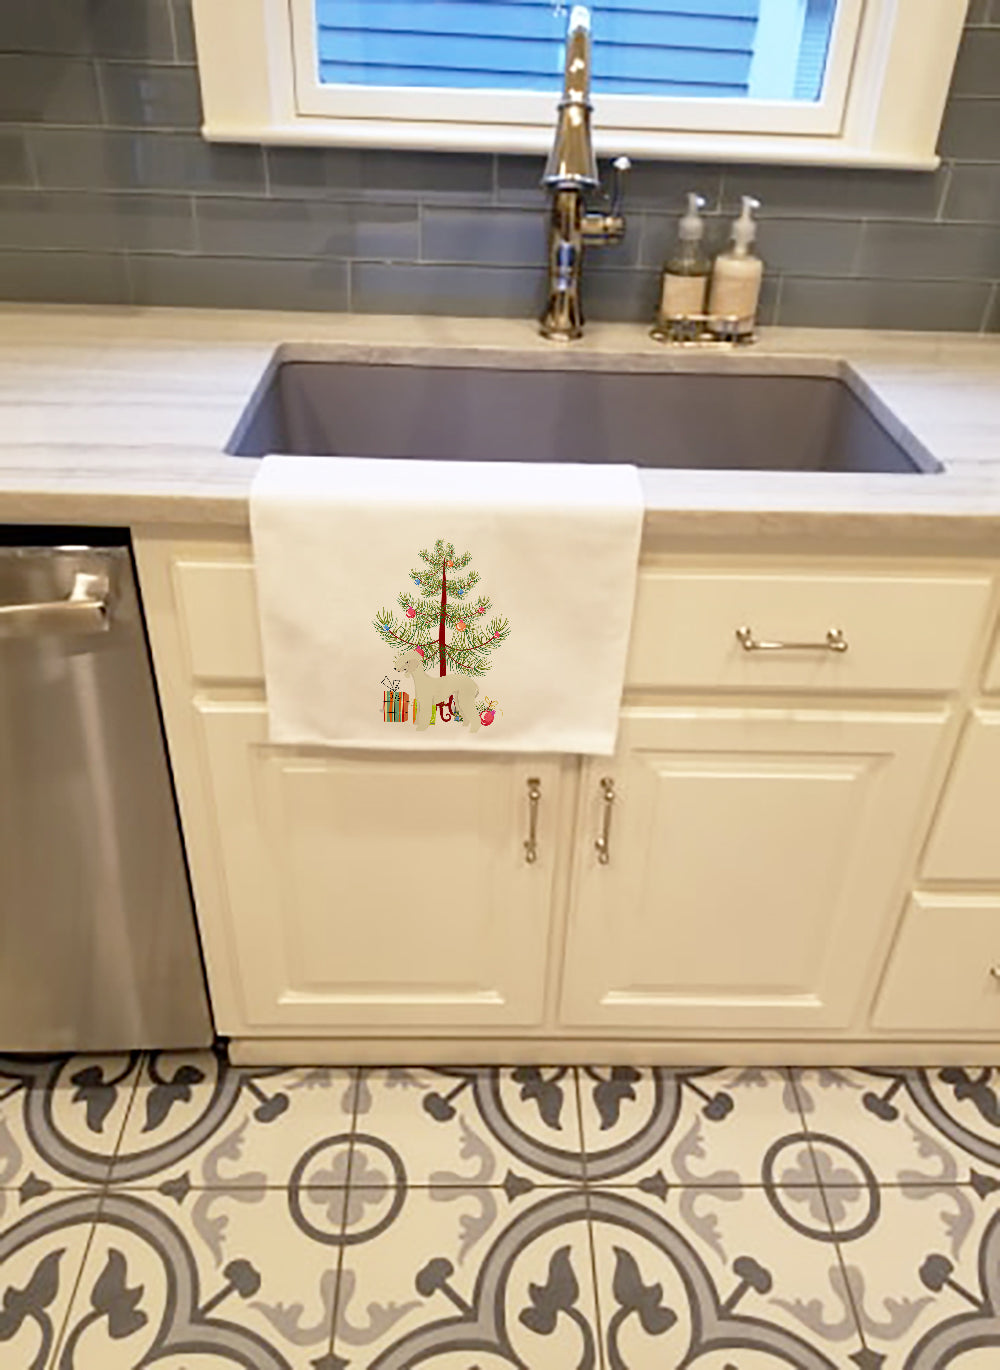 Buy this Bedlington Terrier Christmas Tree White Kitchen Towel Set of 2